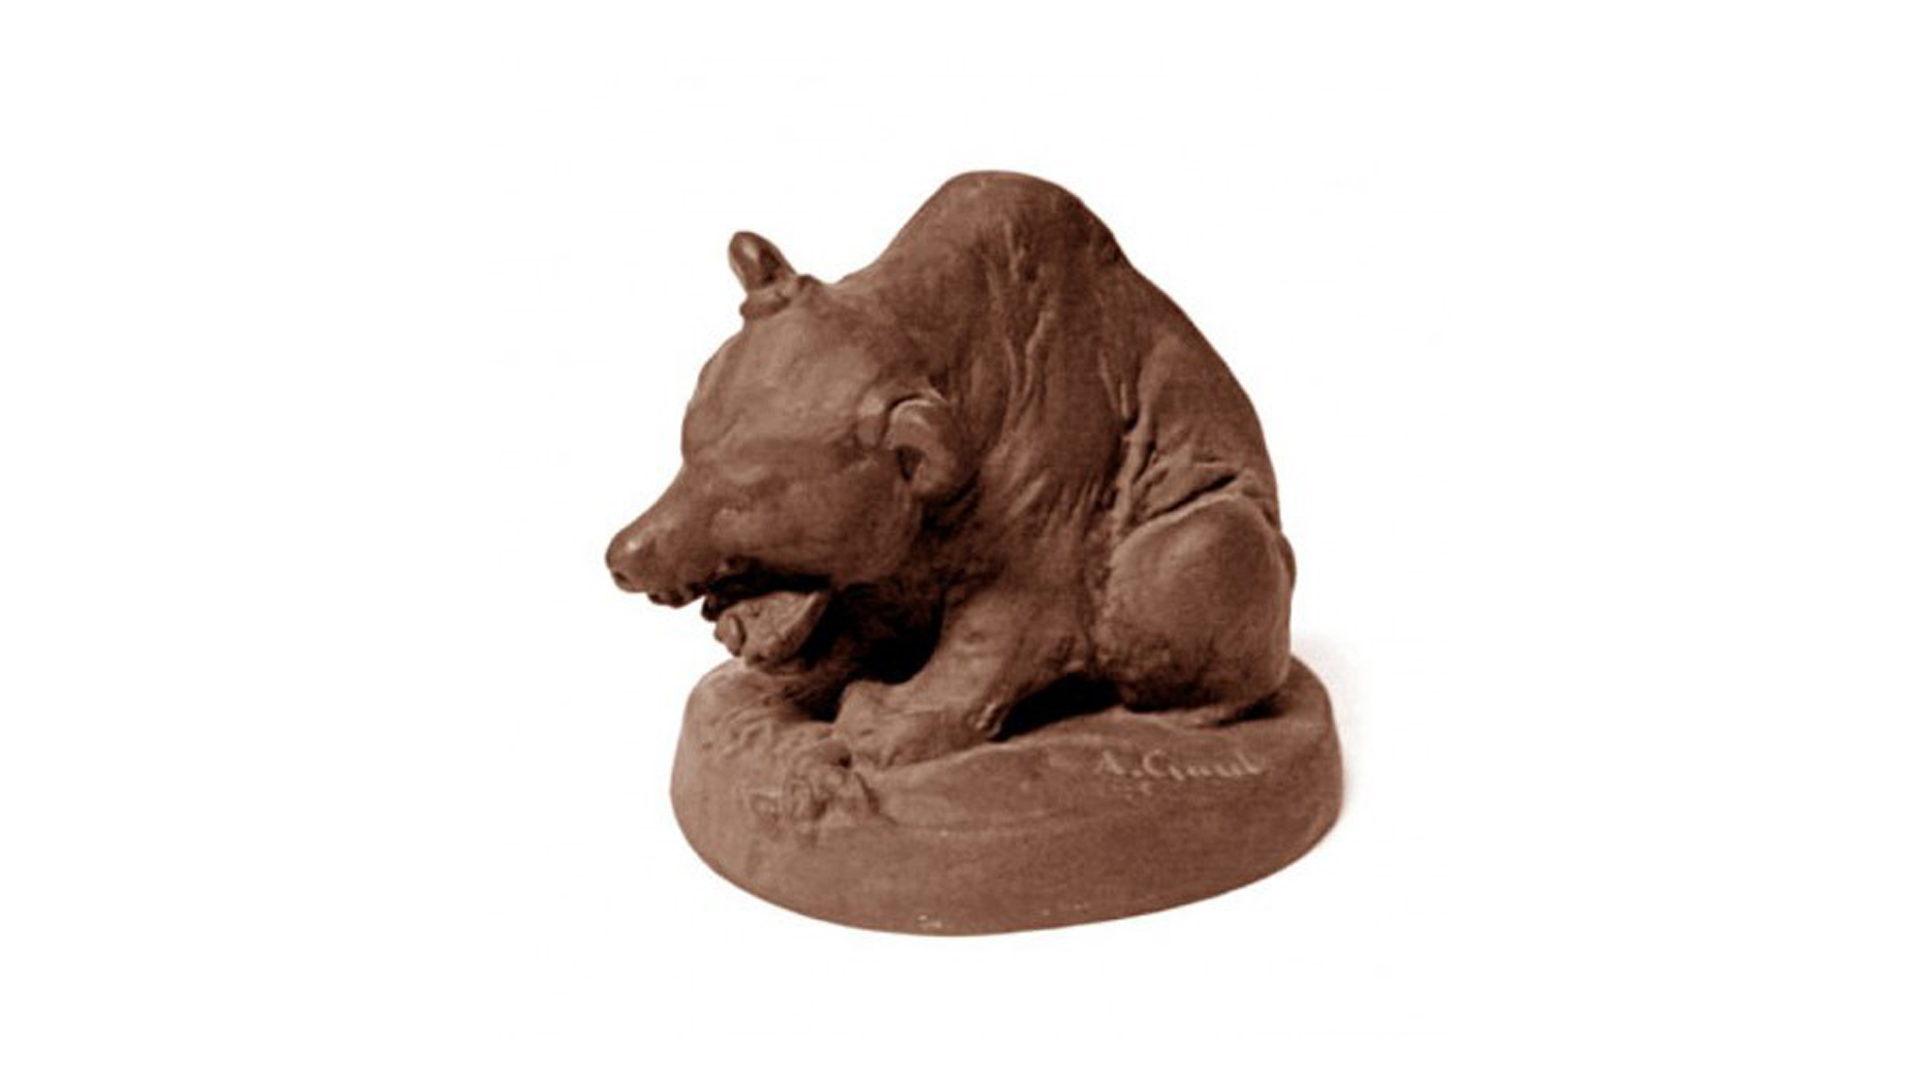 Фигурка Meissen 9 см Медведь за трапезой (Август Гаул, 1923г.)